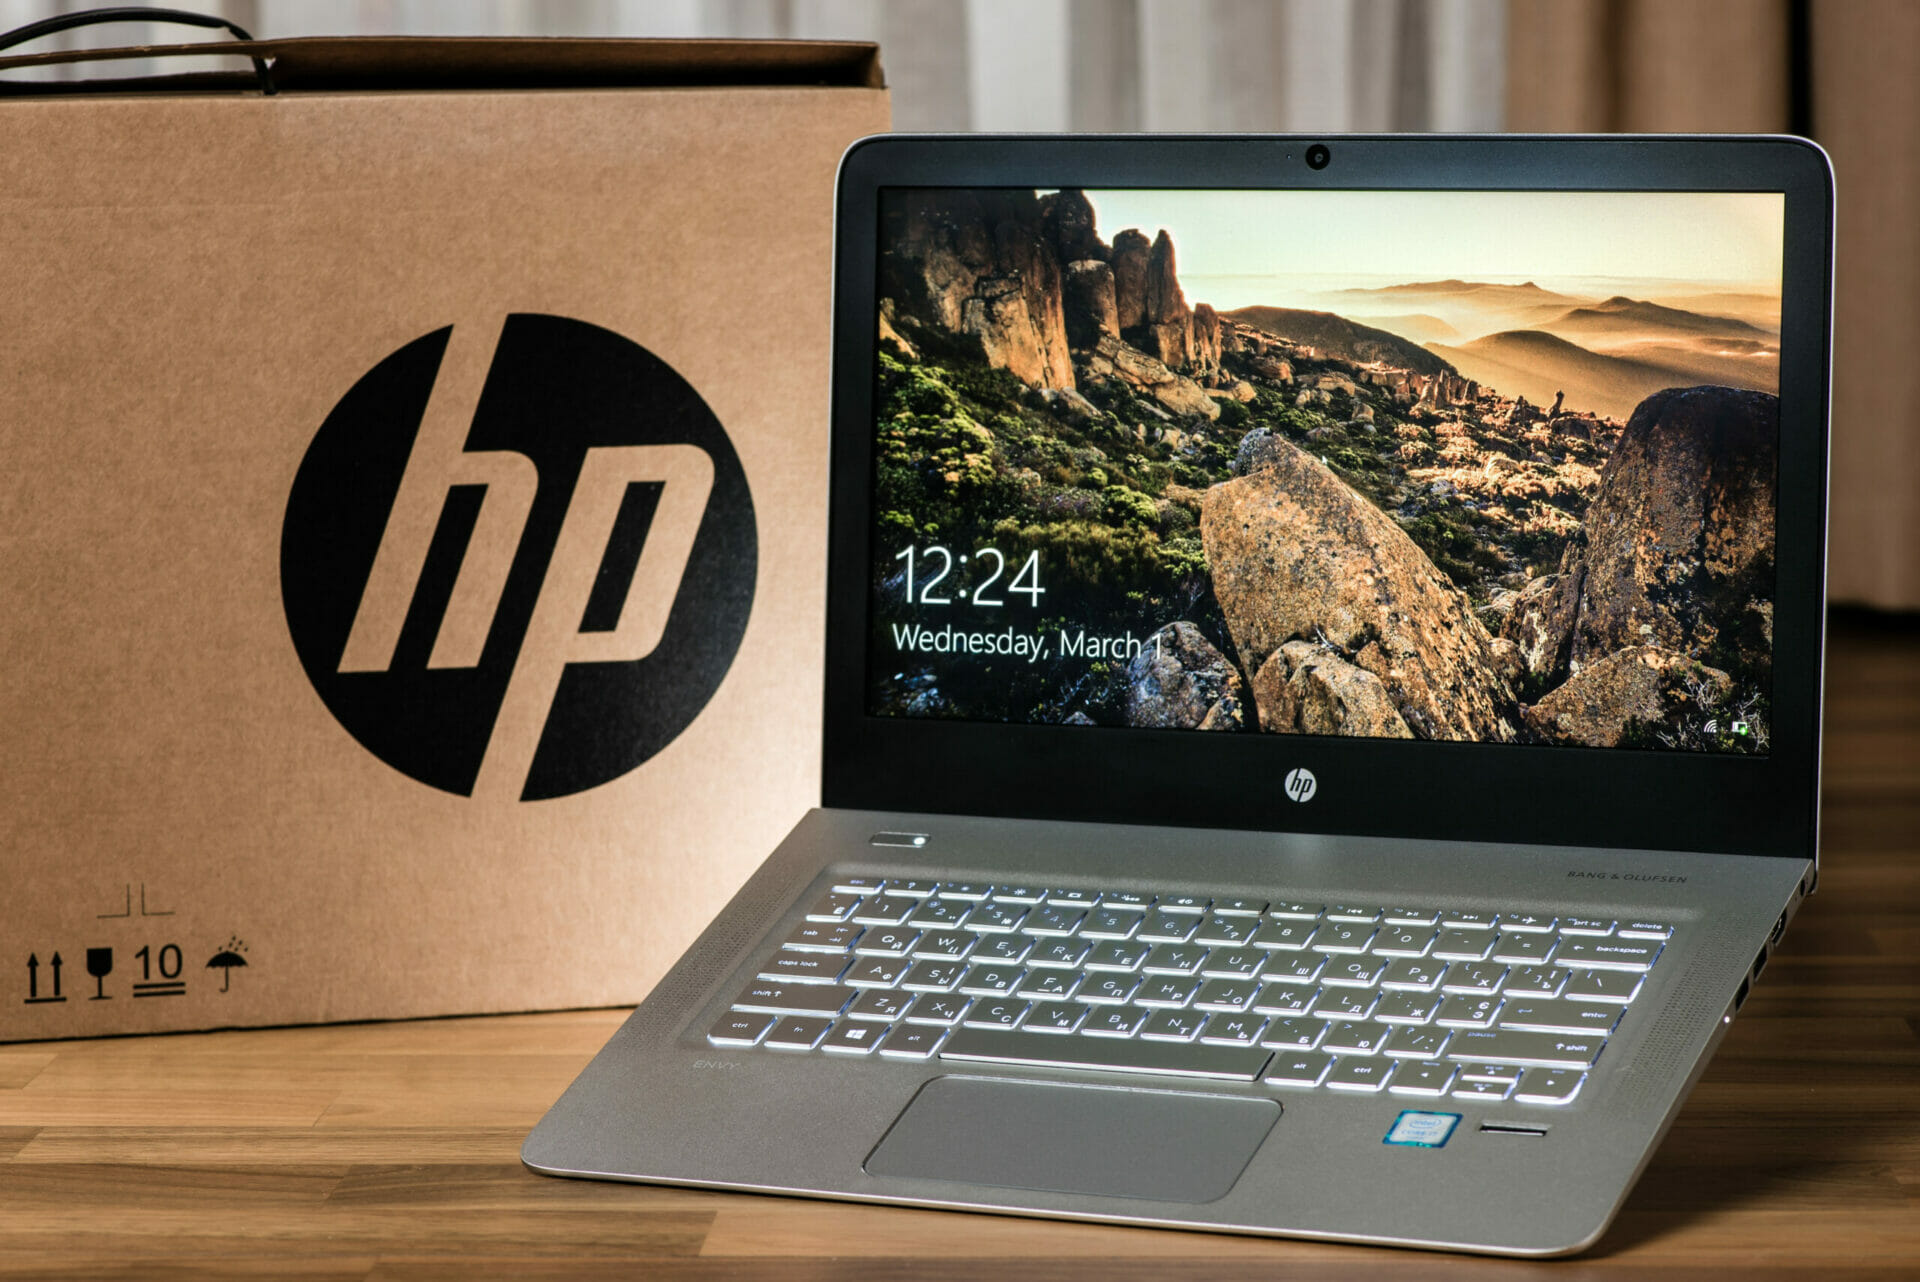 HP laptop near a HP box